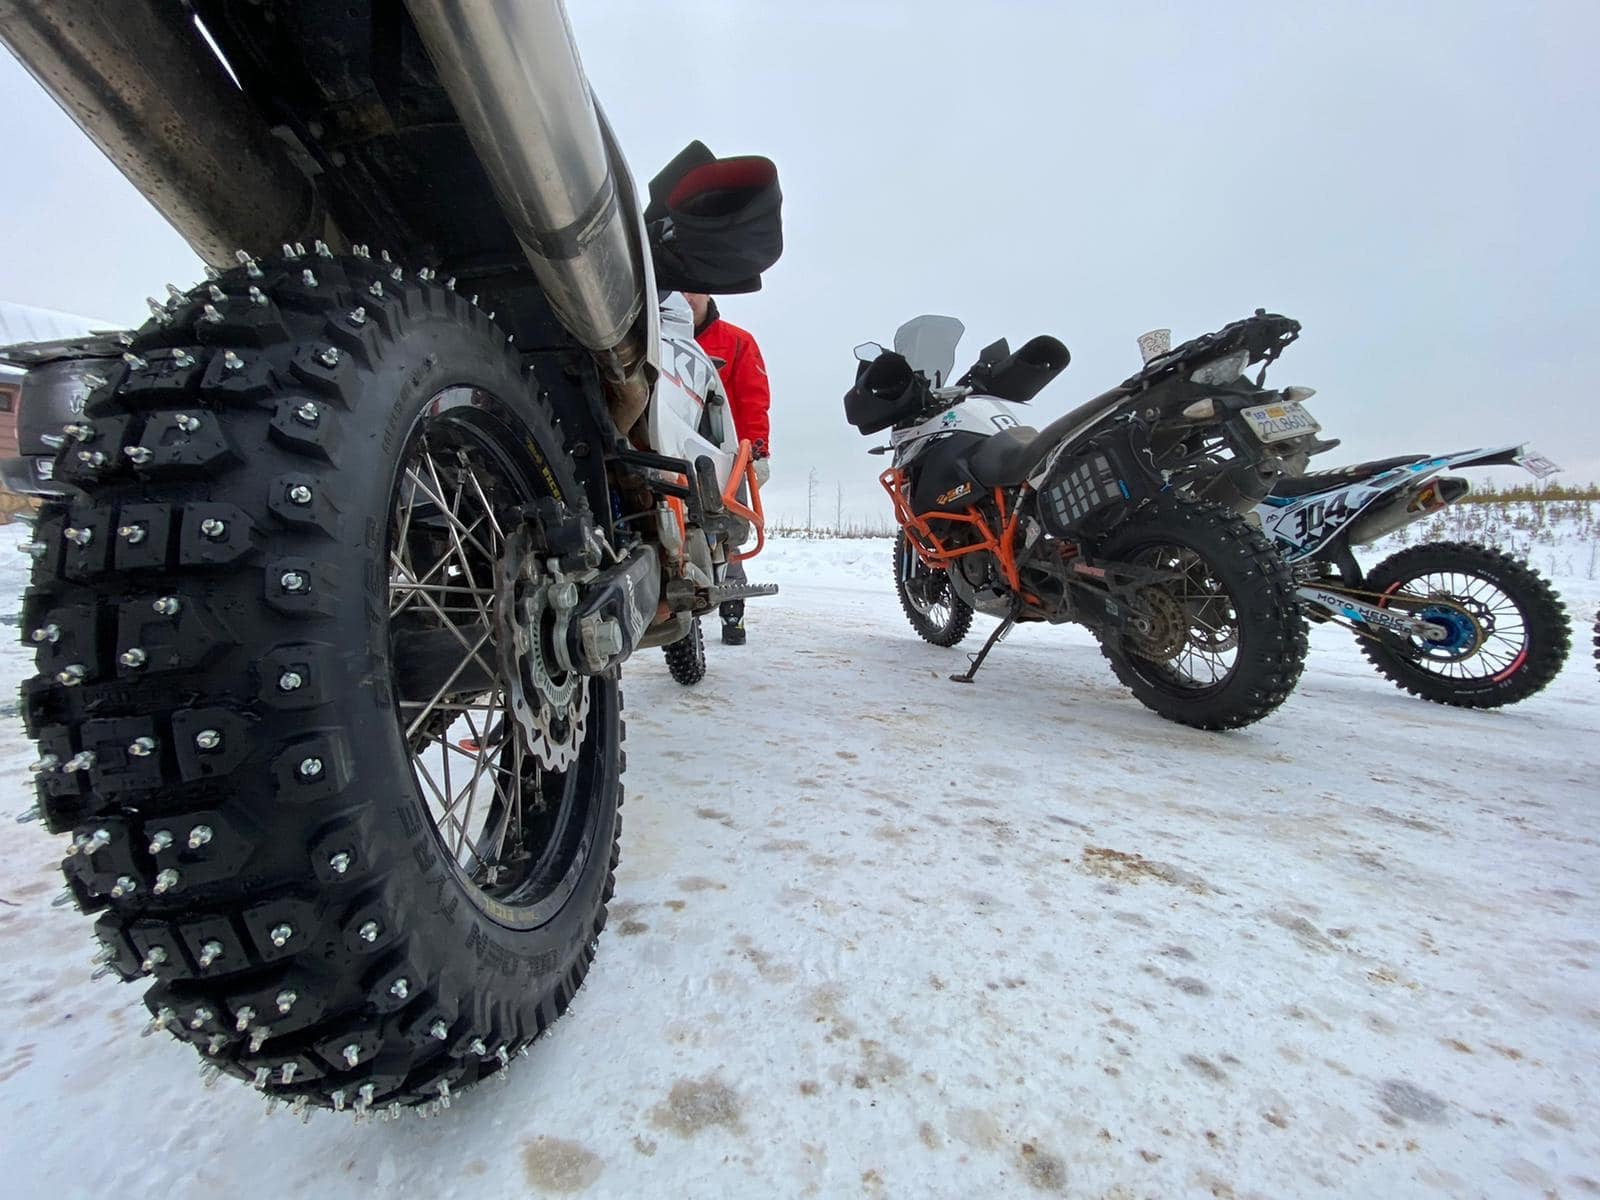 Ride North Moto- Ice roads in the North on ADV bikes...hell ya.